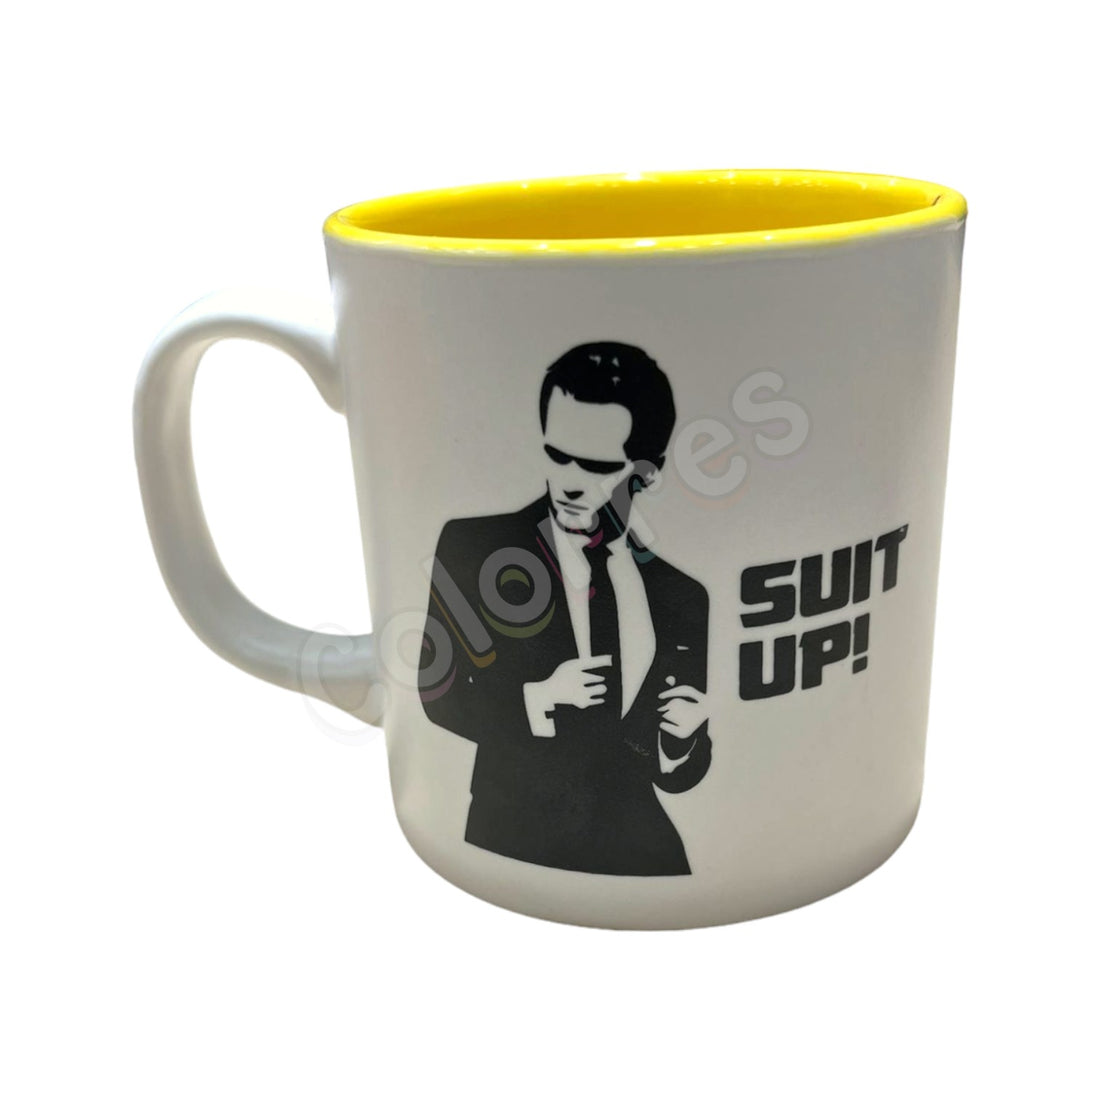 HIMYM - Suit Up! Mug